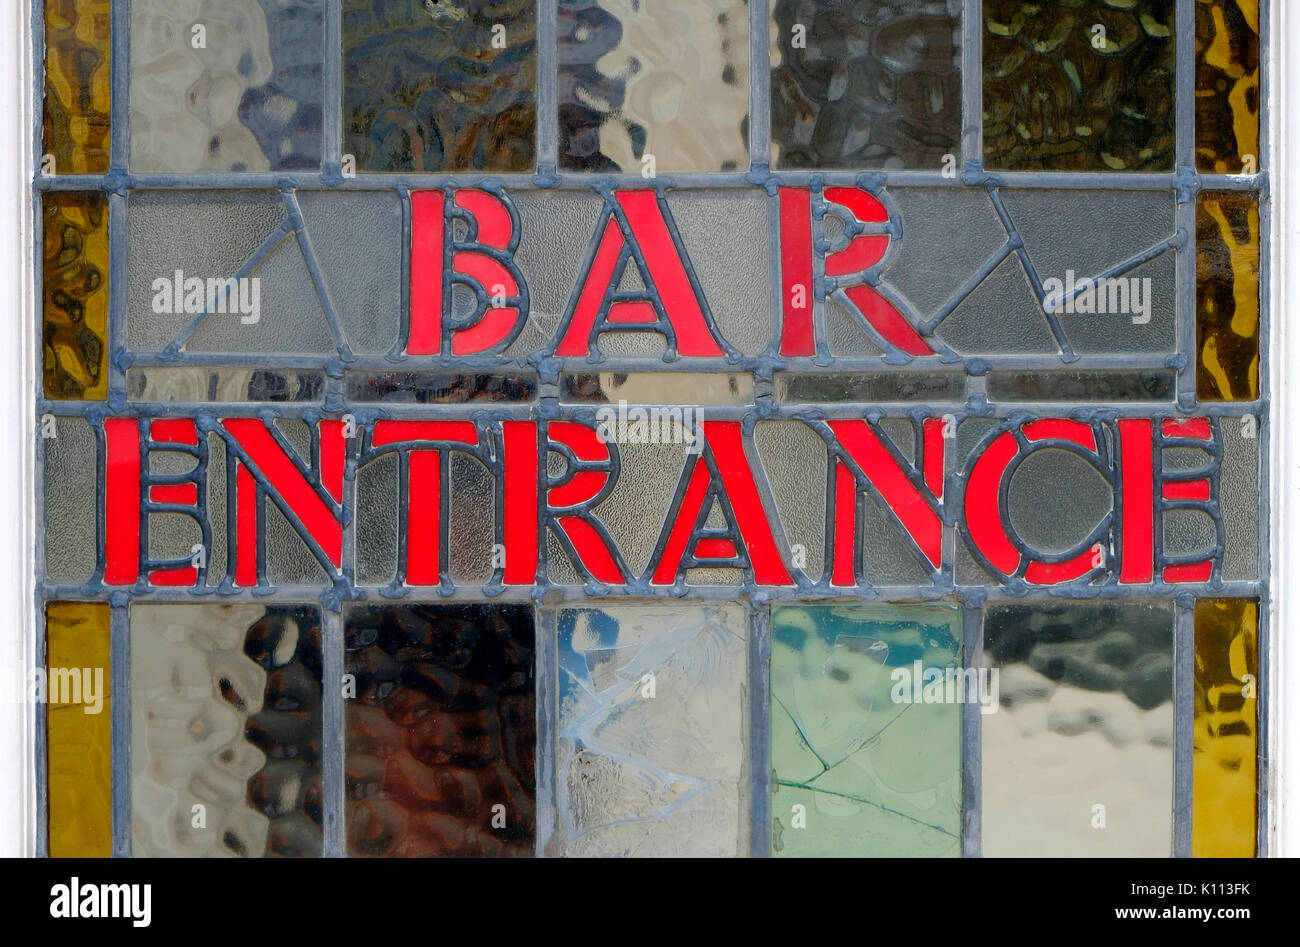 bar entrance sign in vintage glass pub door Stock Photo